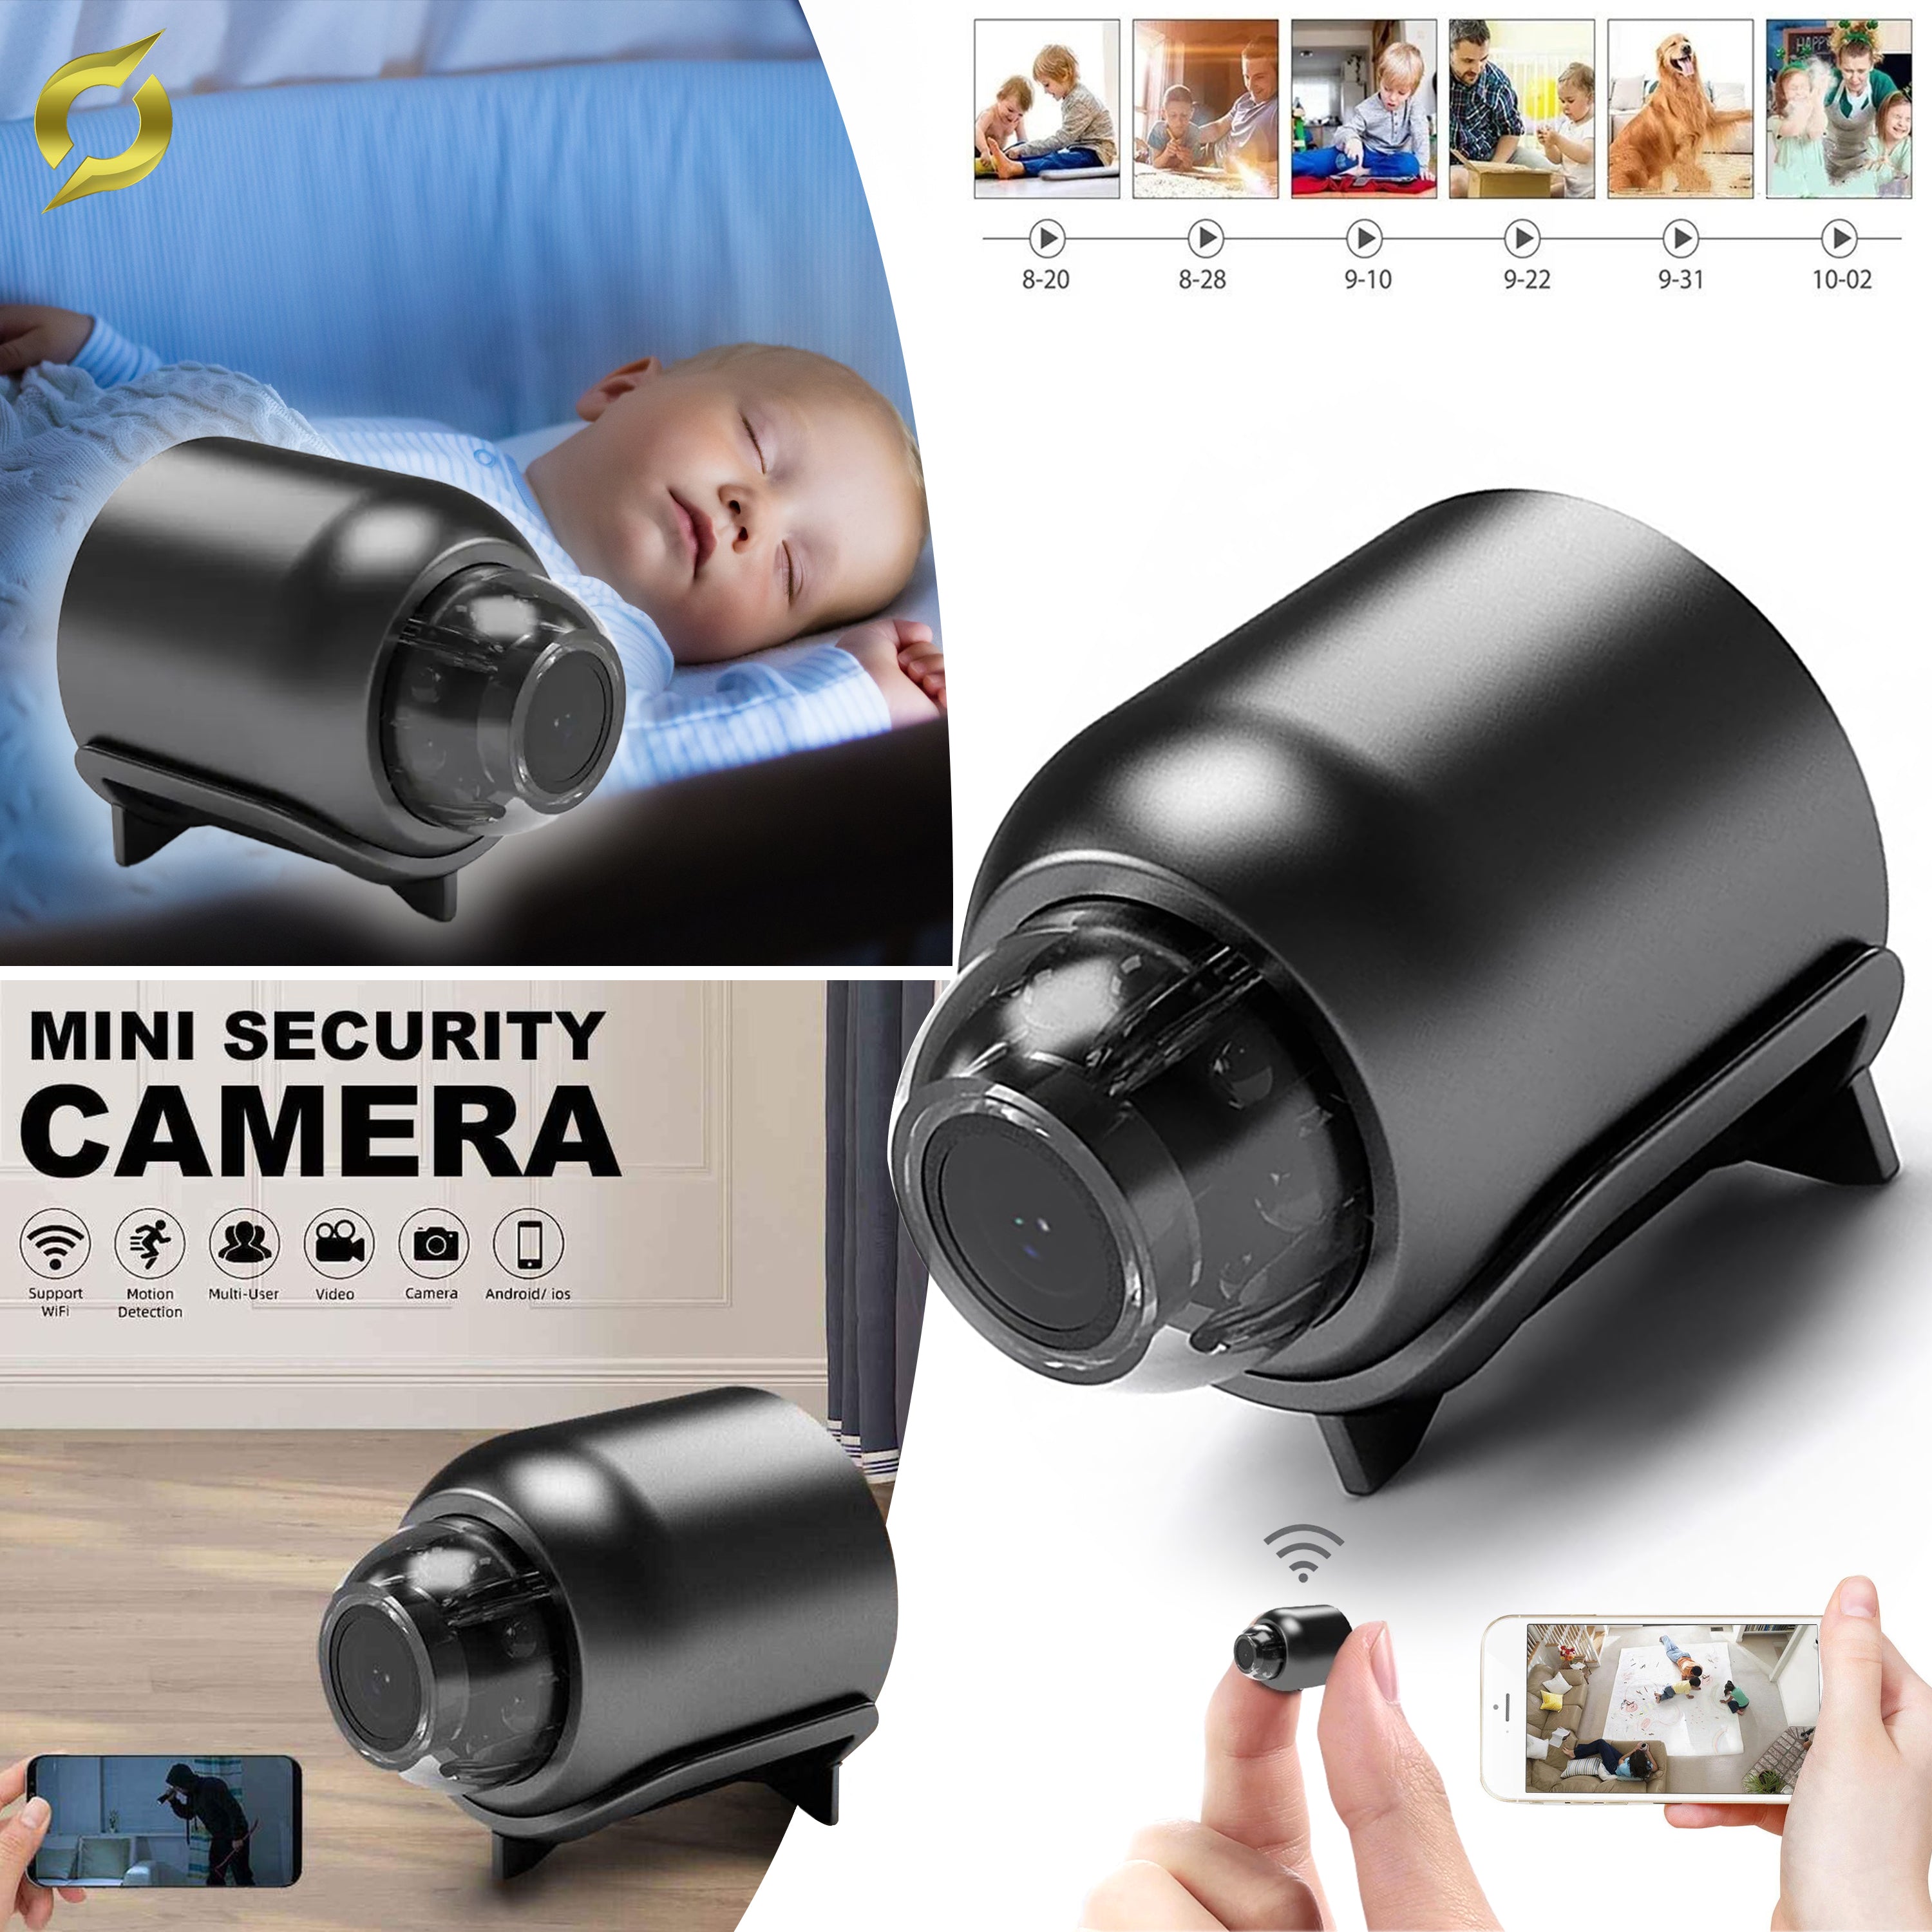 Mini sigurnosna kamera | GuardEye